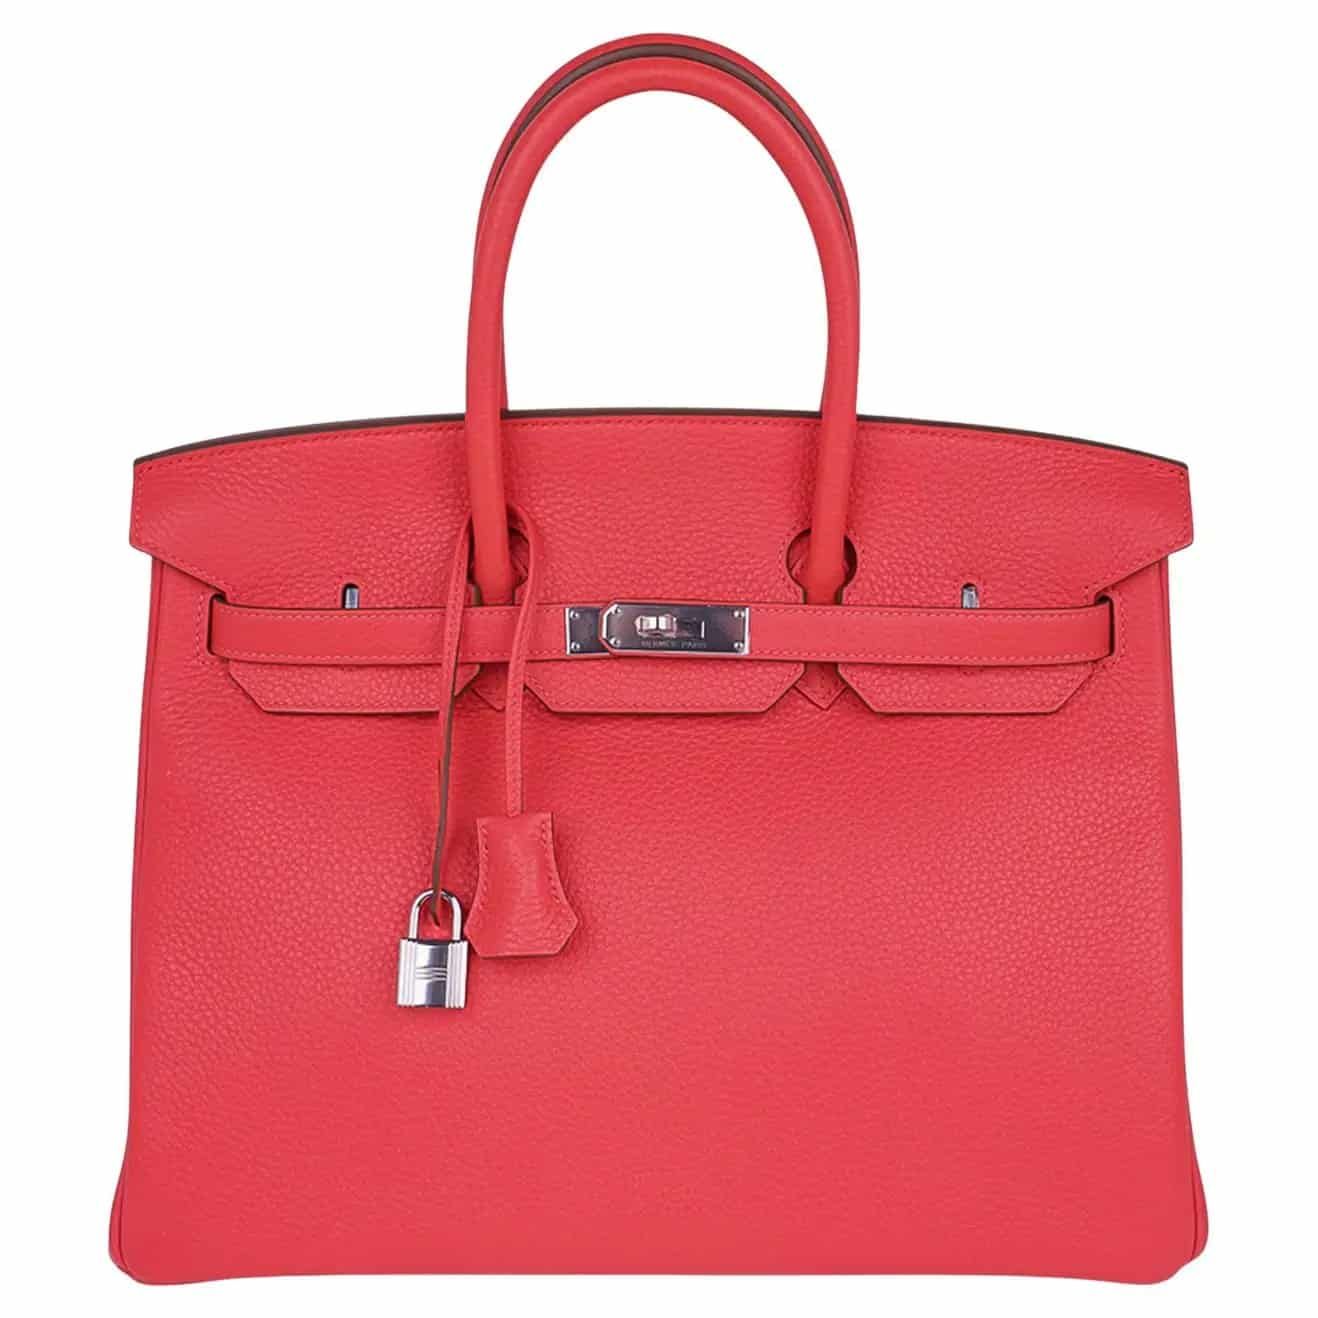 Real vs. Fake Hermès Birkin Bags - The Facts - Property Room Blog